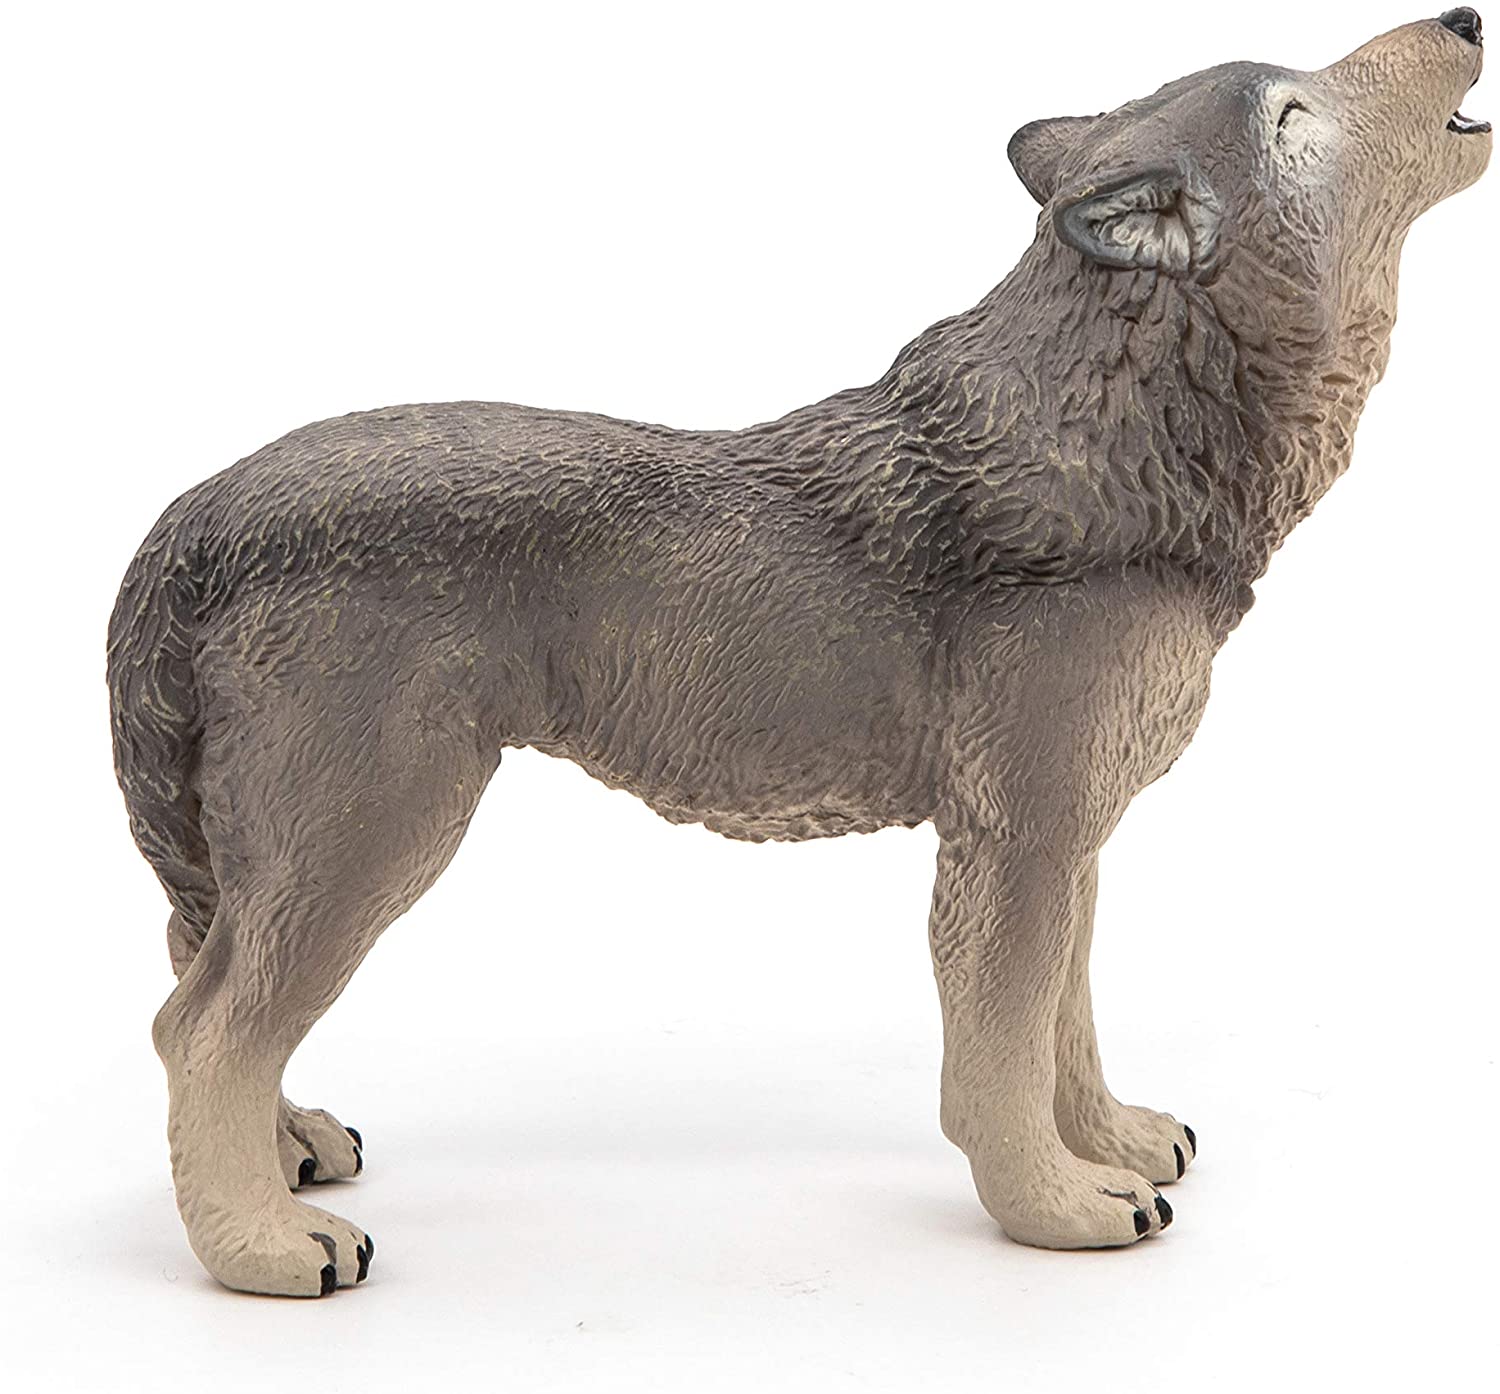 2pcs Wild Animal Model Howling Wolf Figurine Figures Kids Educational Toy 